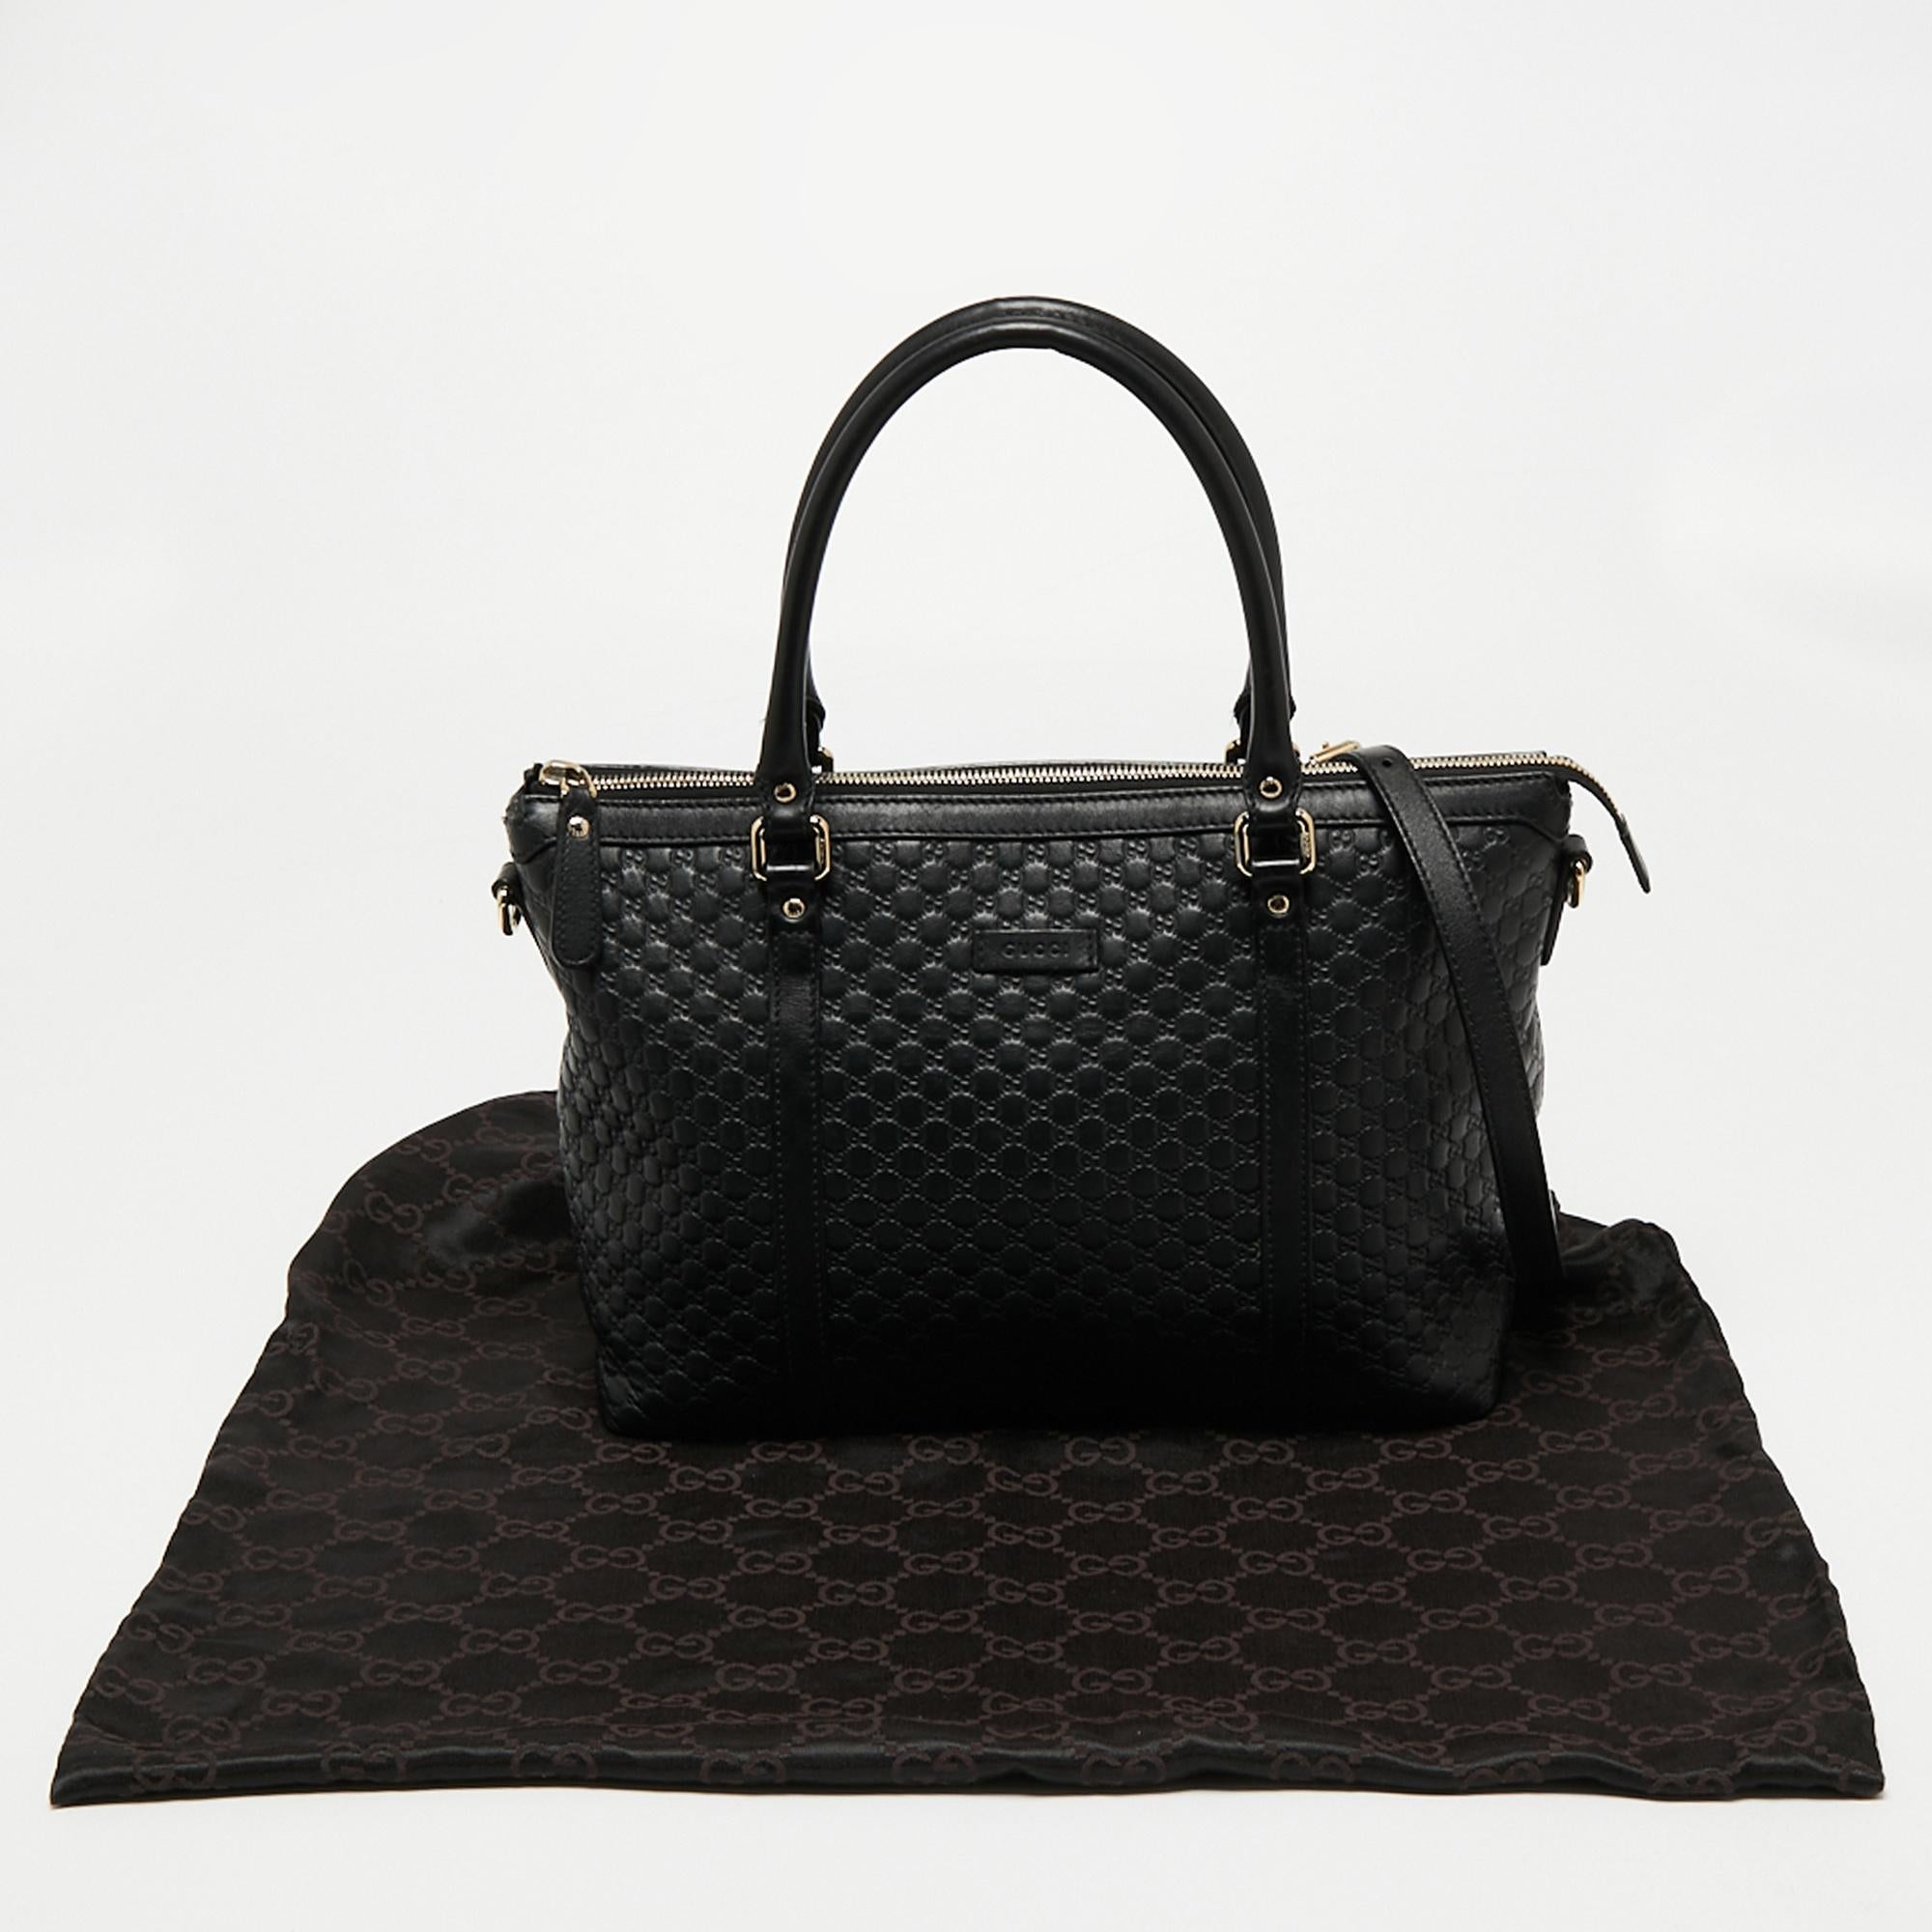 Gucci Black Microguccissima Leather Satchel 9